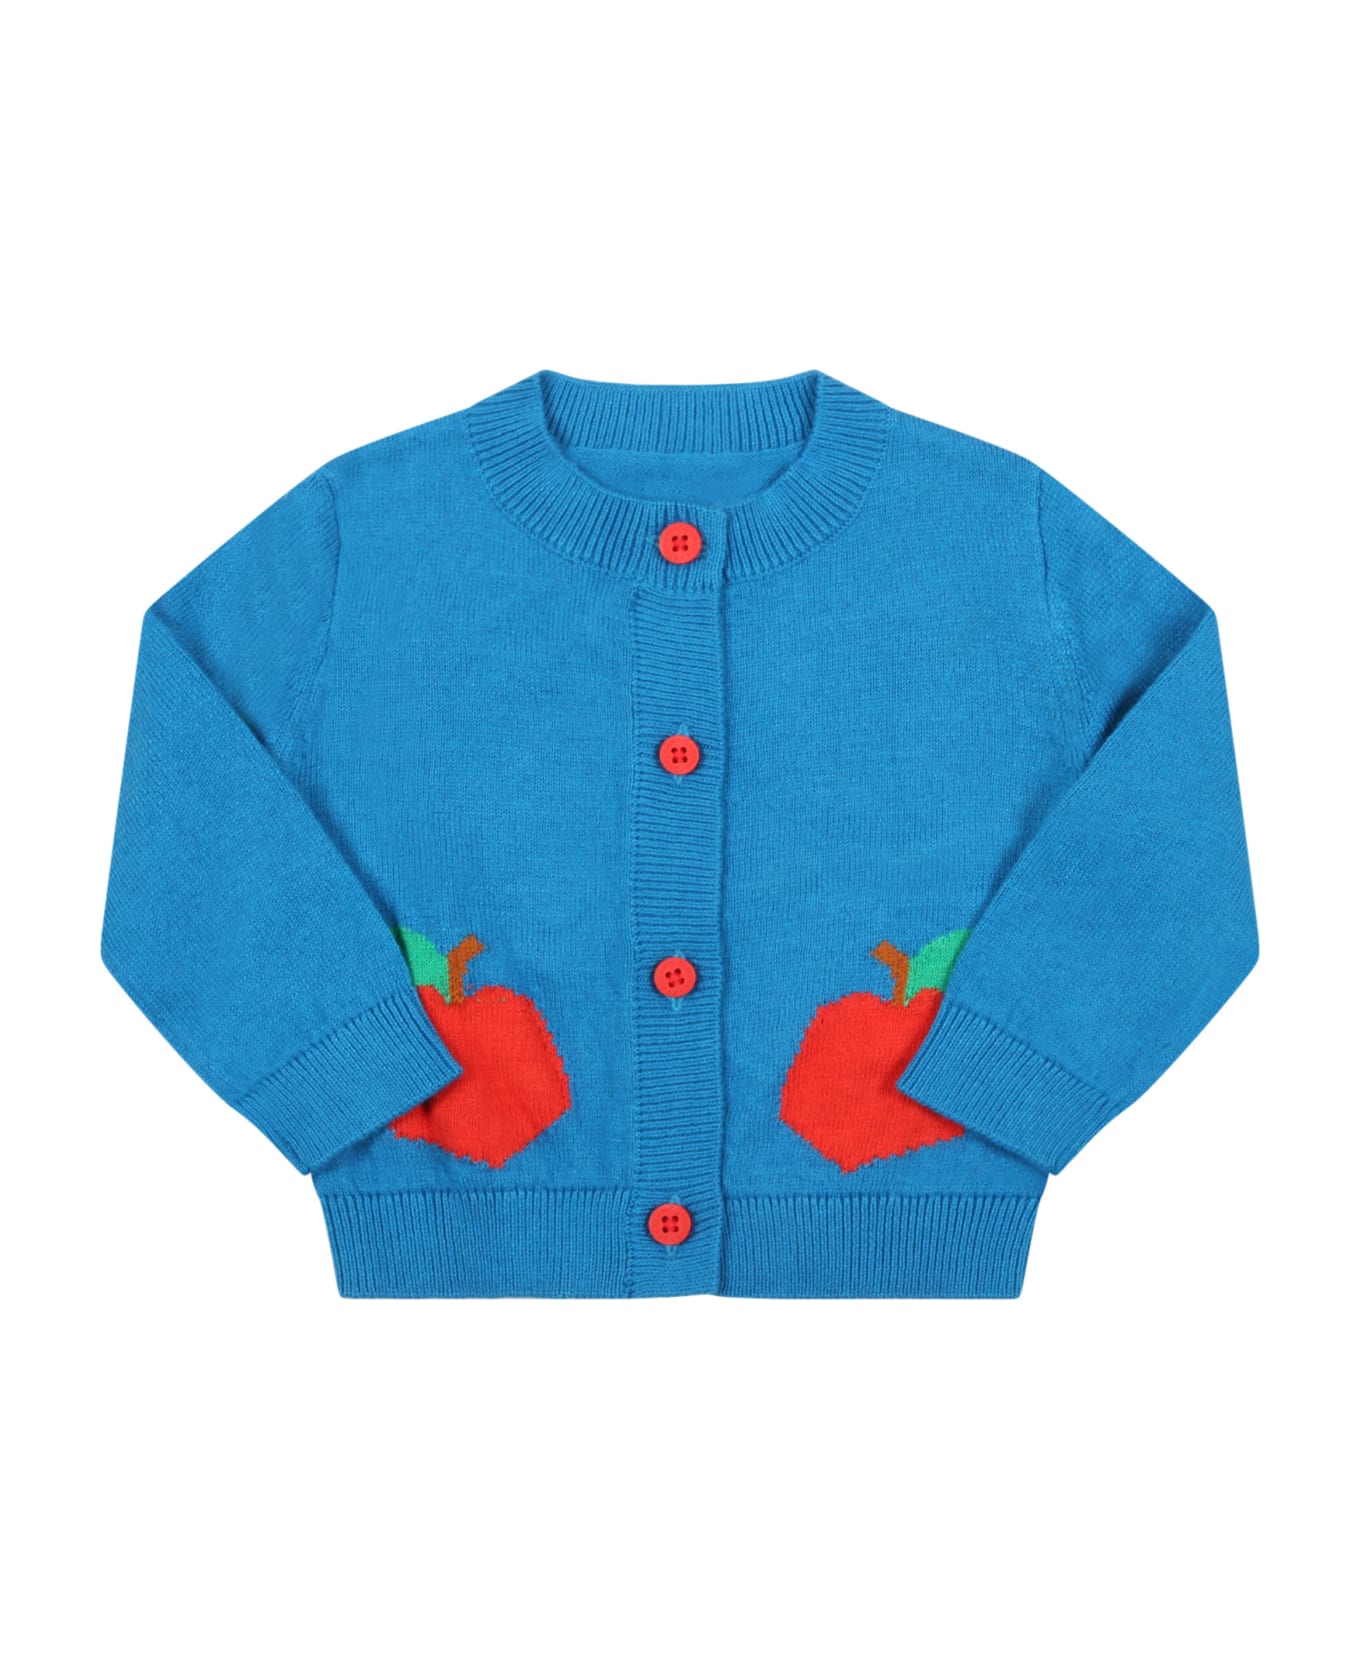 Stella McCartney Kids Light Blue Cardigan For Baby Girl With Apples - Light Blue